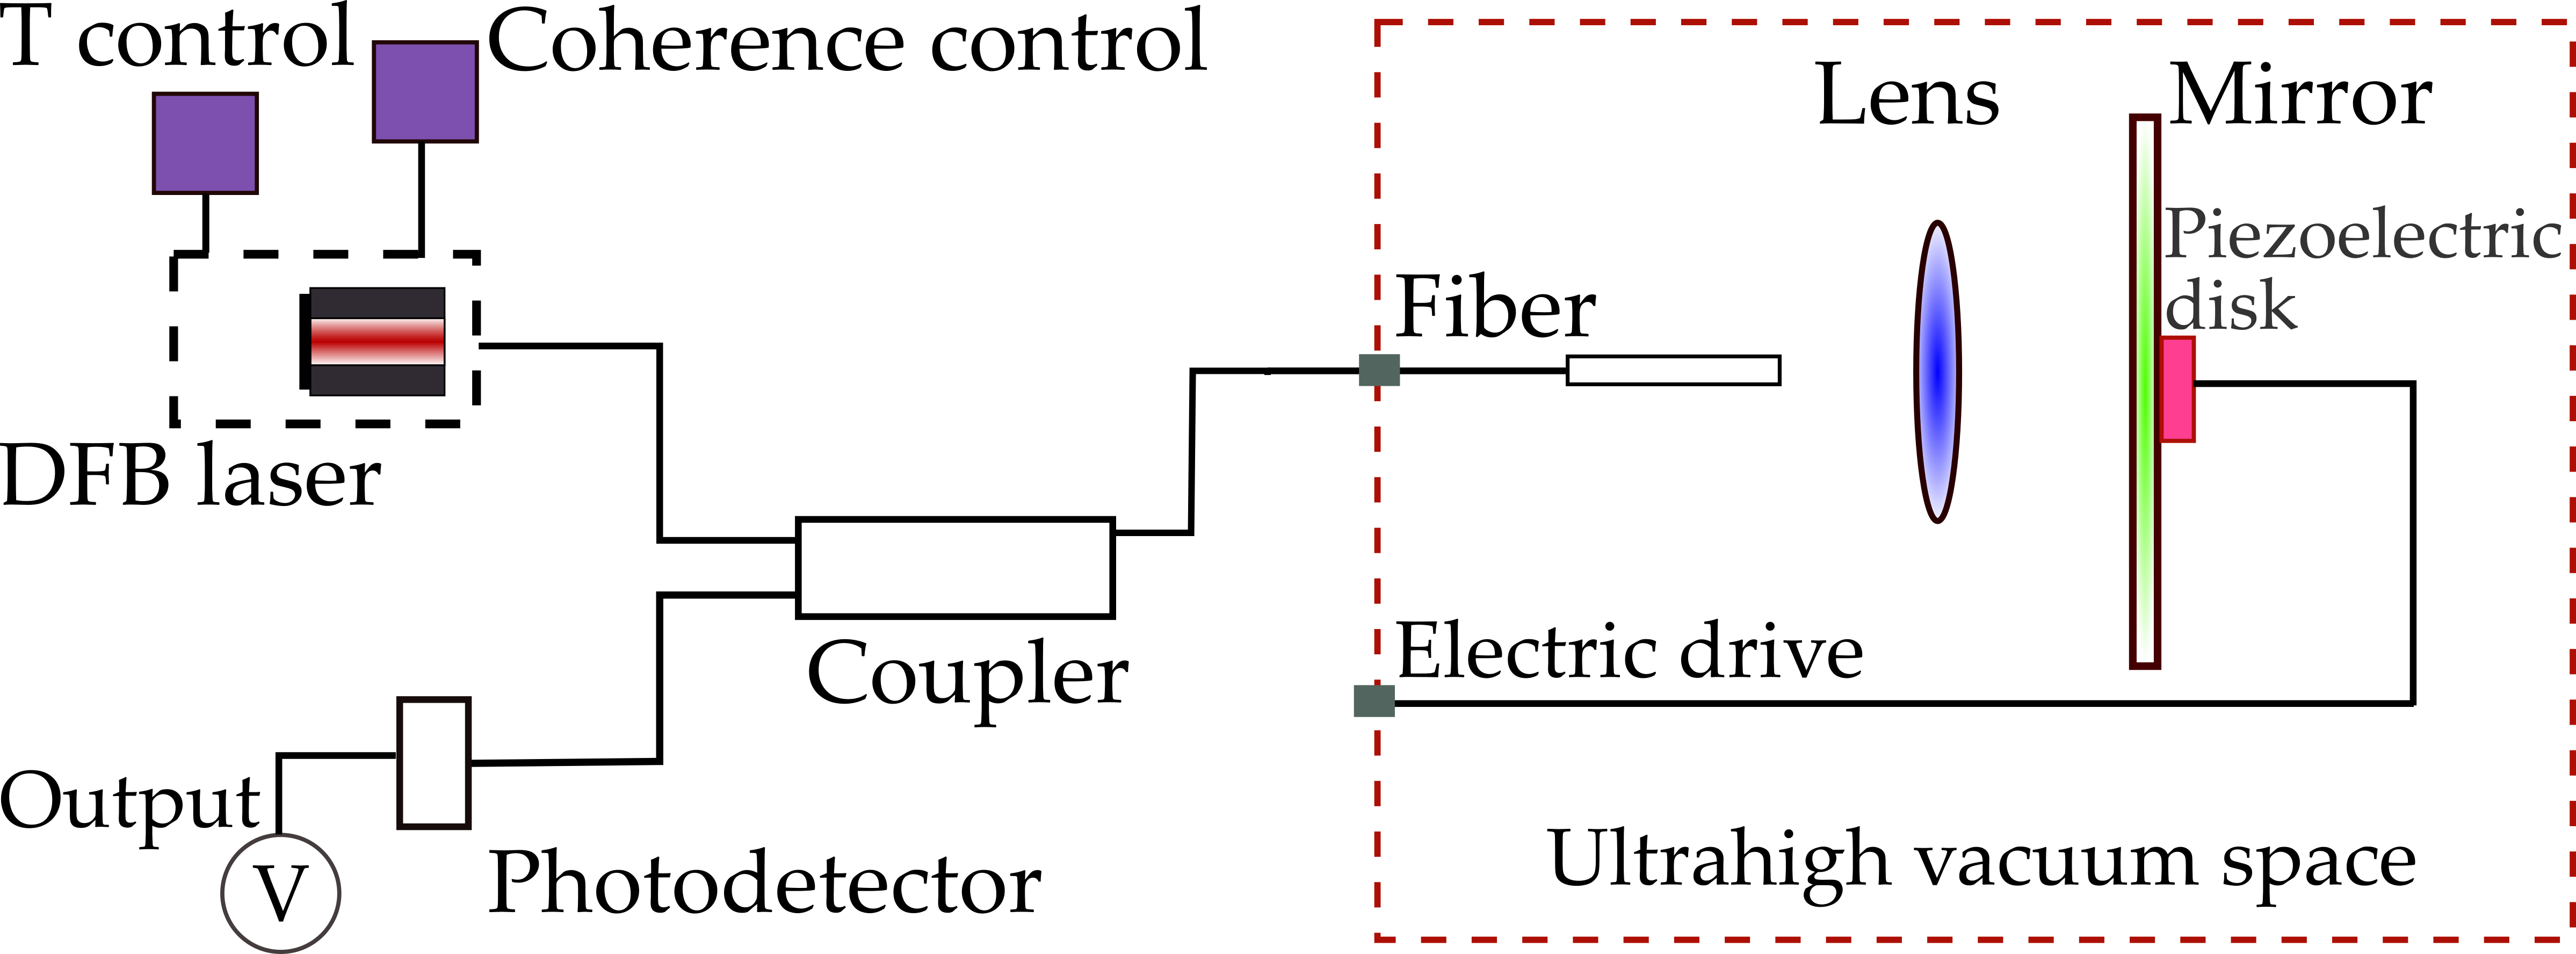 fiber-interferometer-layout.png